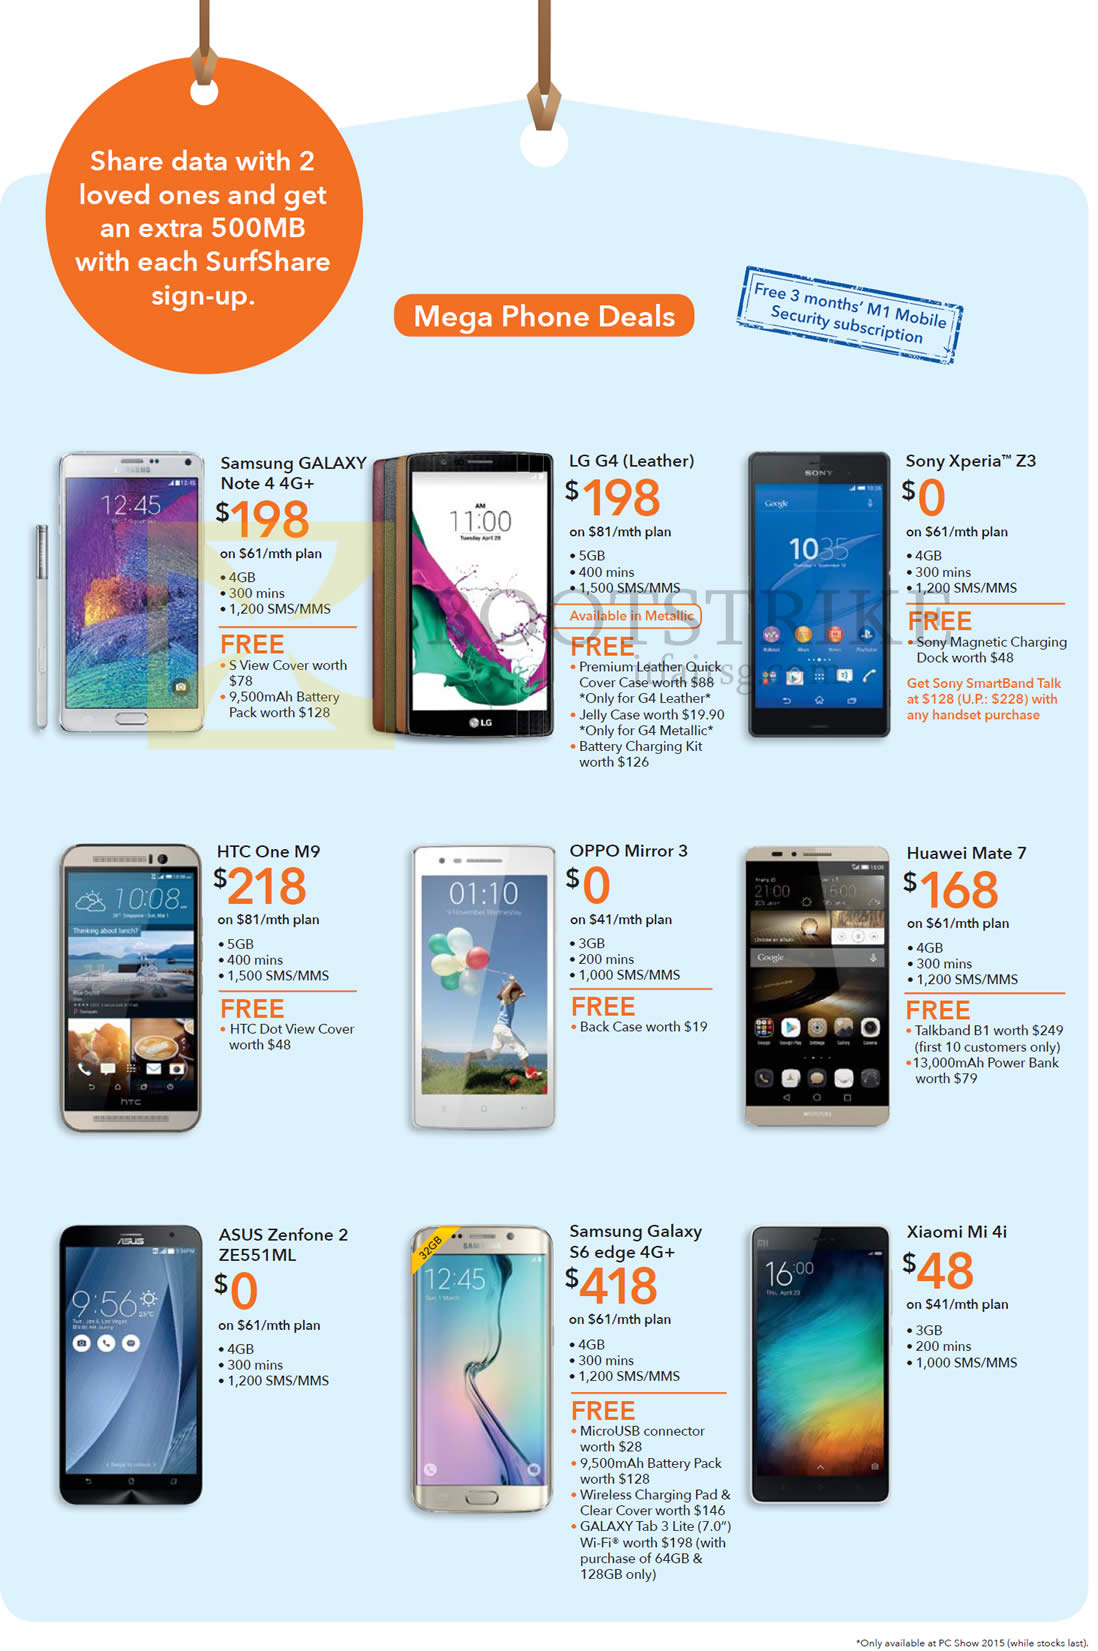 PC SHOW 2015 price list image brochure of M1 Samsung Galaxy Note 4 S6, LG G4, Sony Xperia Z3, HTC One M9, Oppo Mirror 3, Huawei Mate 7, ASUS Zenfone 2 ZE551ML, Xiaomi Mi 4i